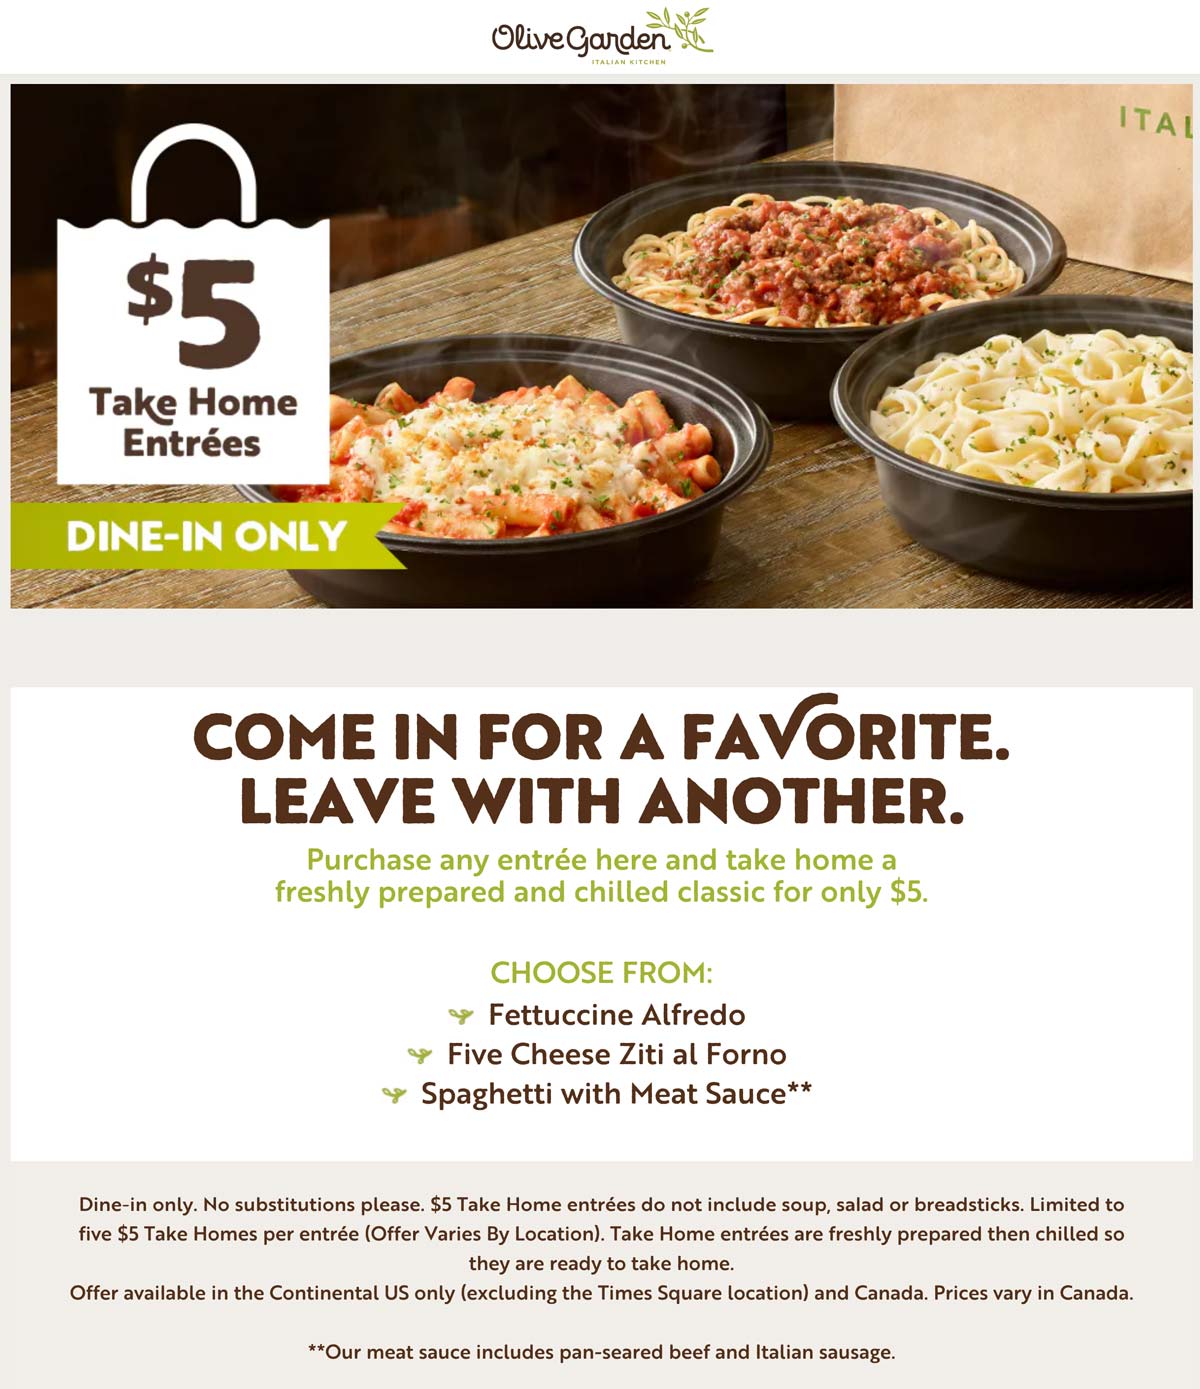 Olive Garden restaurants Coupon  $5 take home entree with dine-in at Olive Garden #olivegarden 